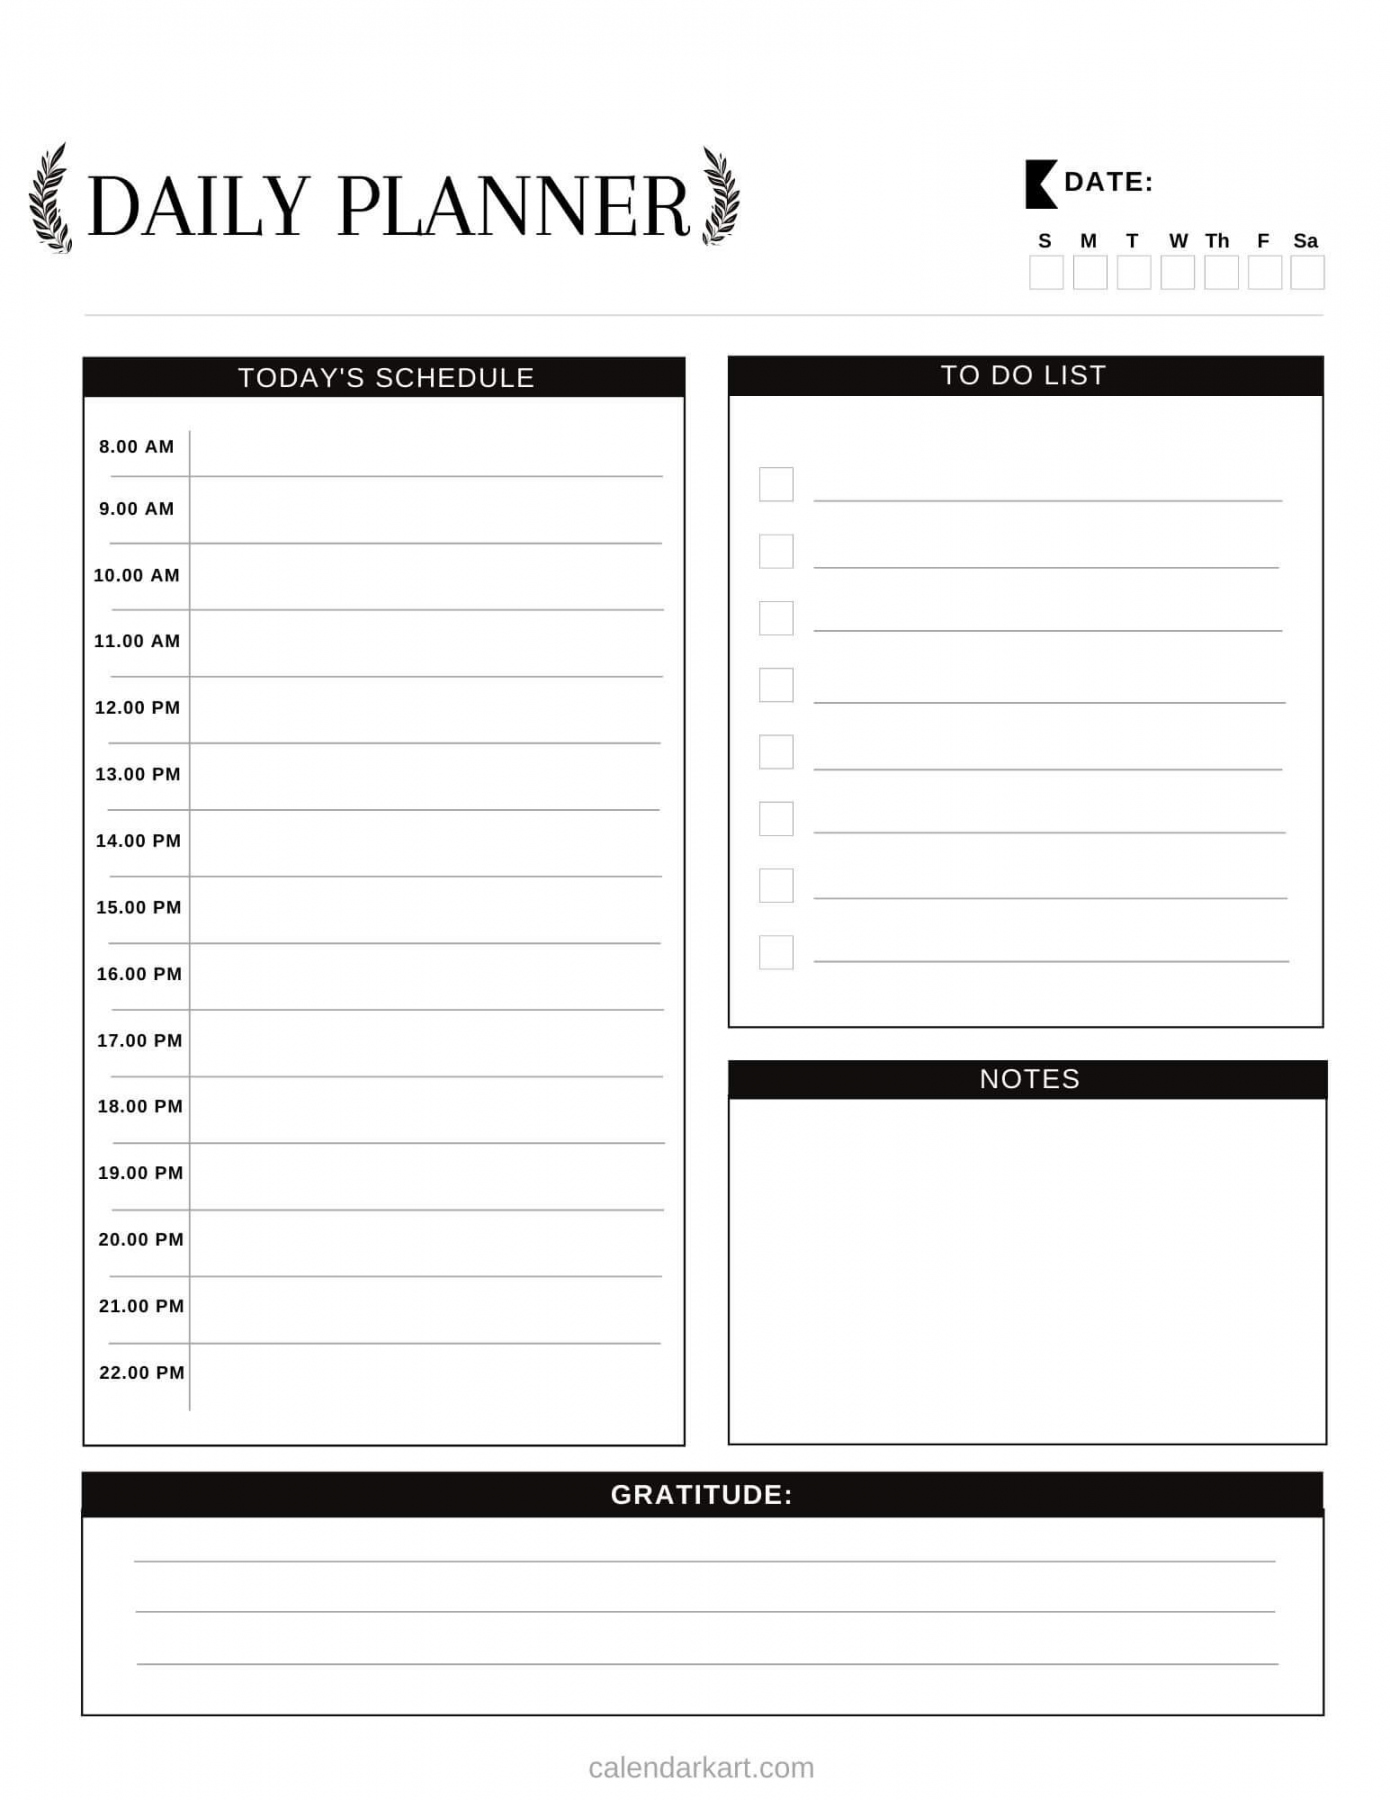 Free Daily Planner Printable - Printable - Free Printable Daily Planner Templates (Editable PDF) - CalendarKart